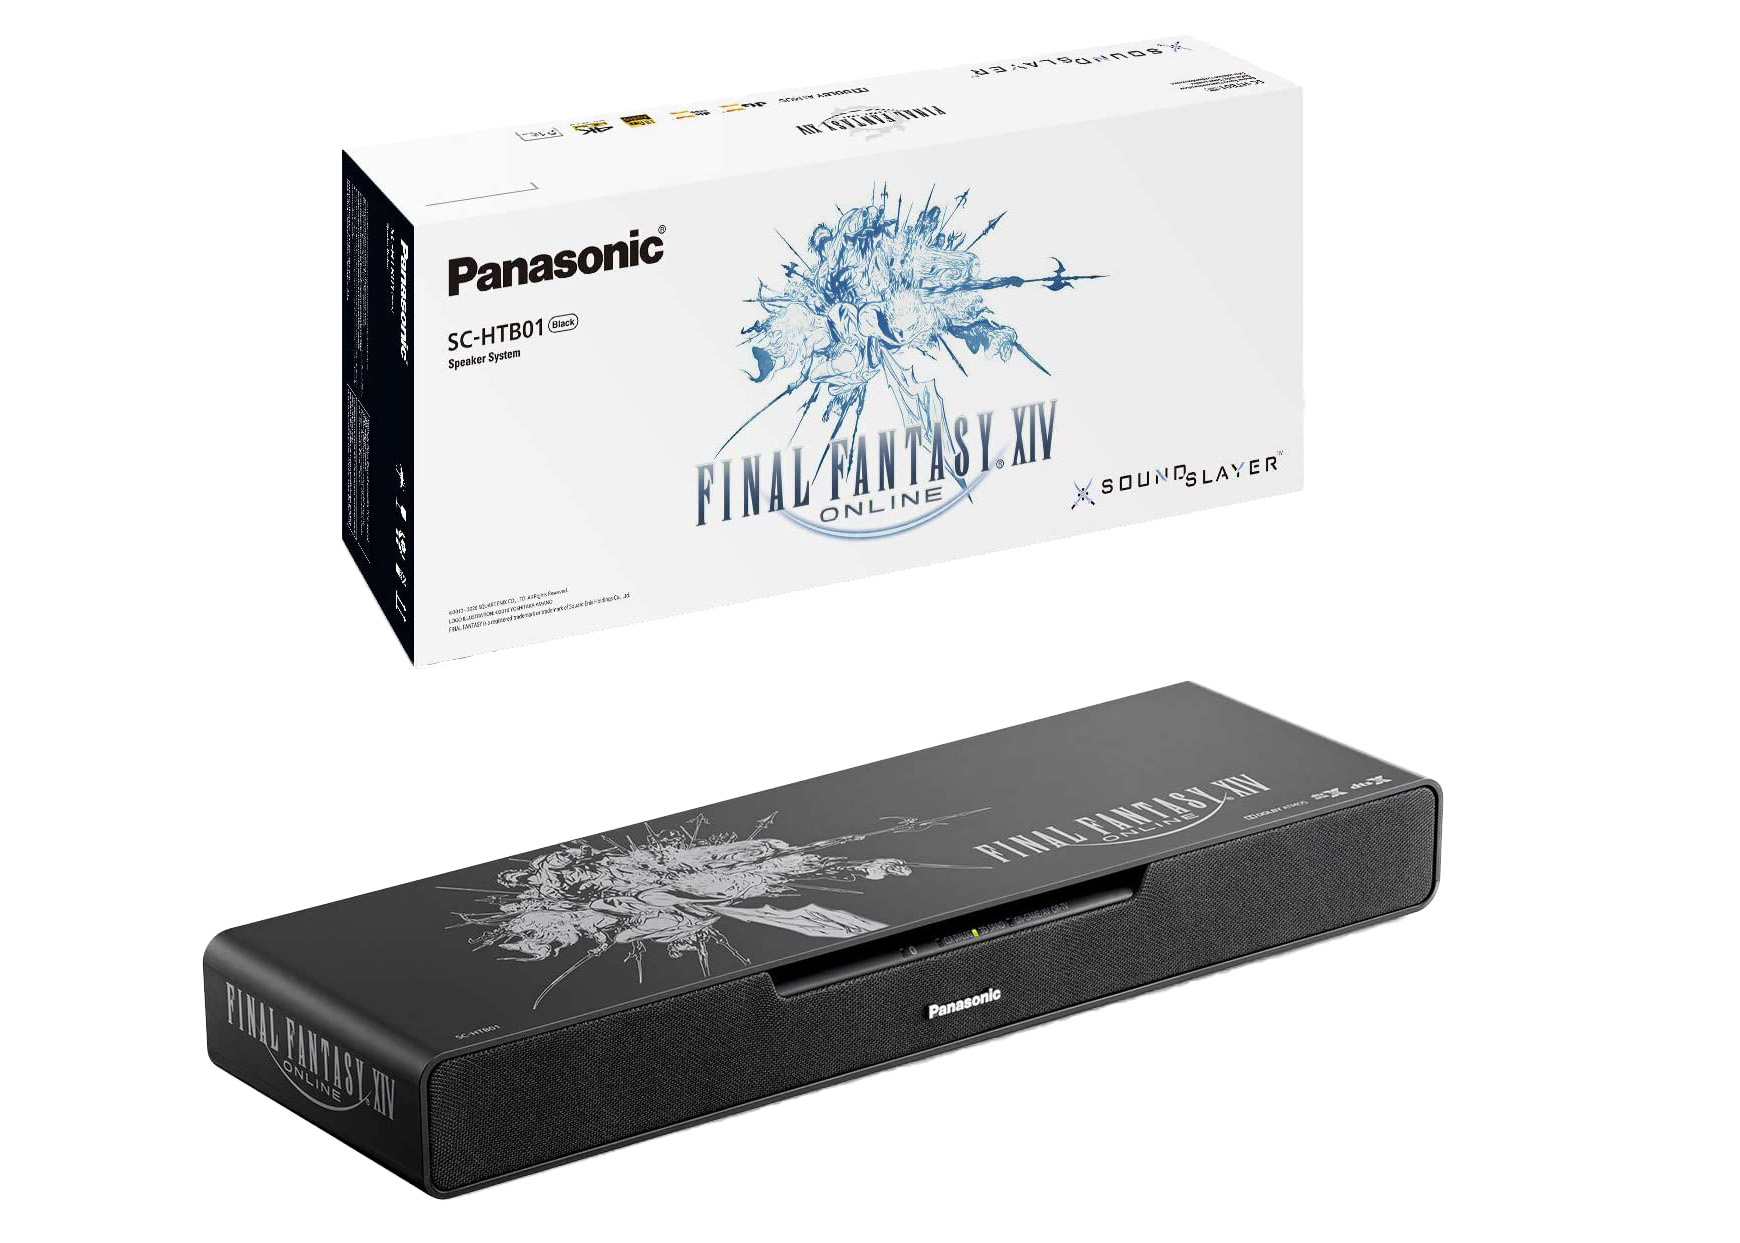 Panasonic SoundSlayer Final Fantasy XIV Gaming Speakers SC